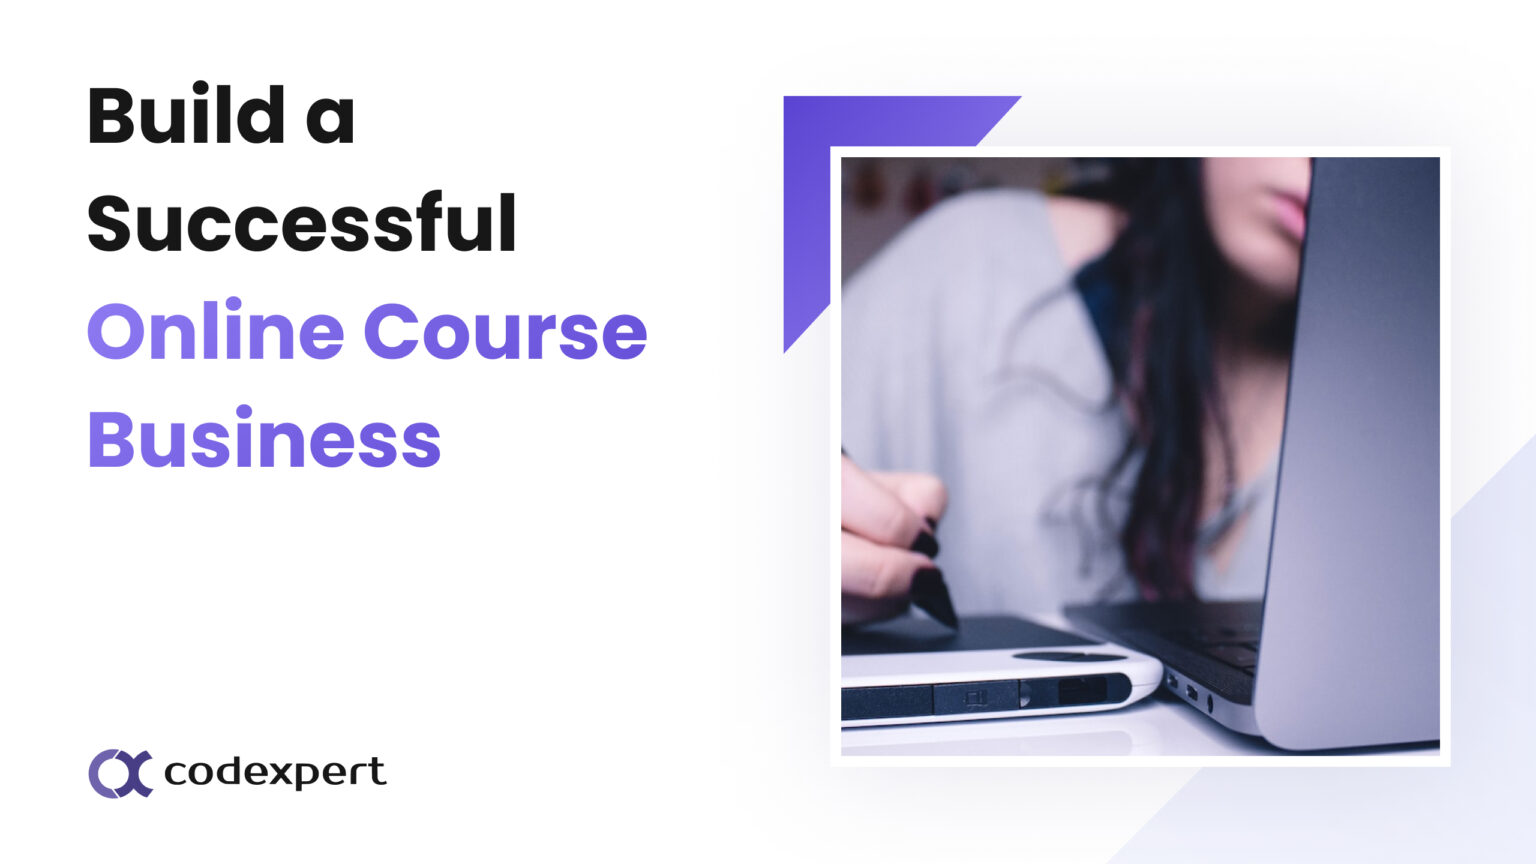 Build a successful online course business